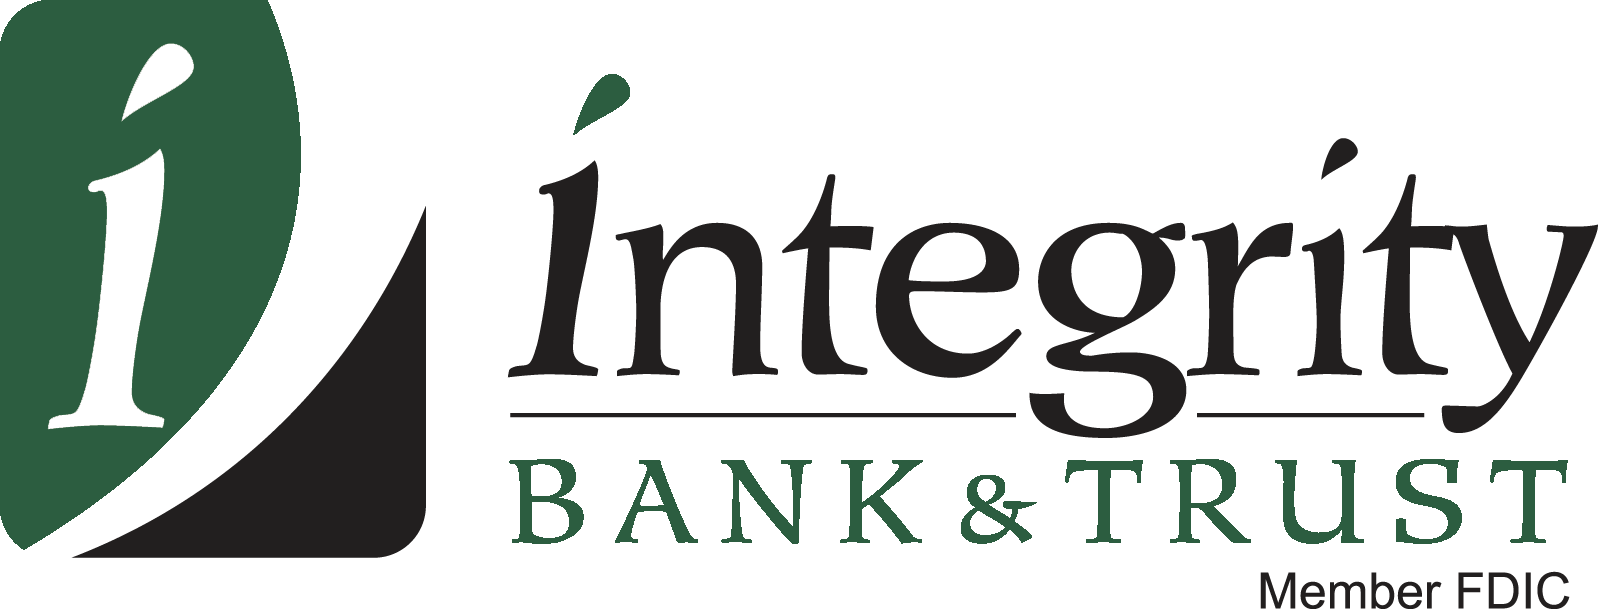 Integrity Bank & Trust